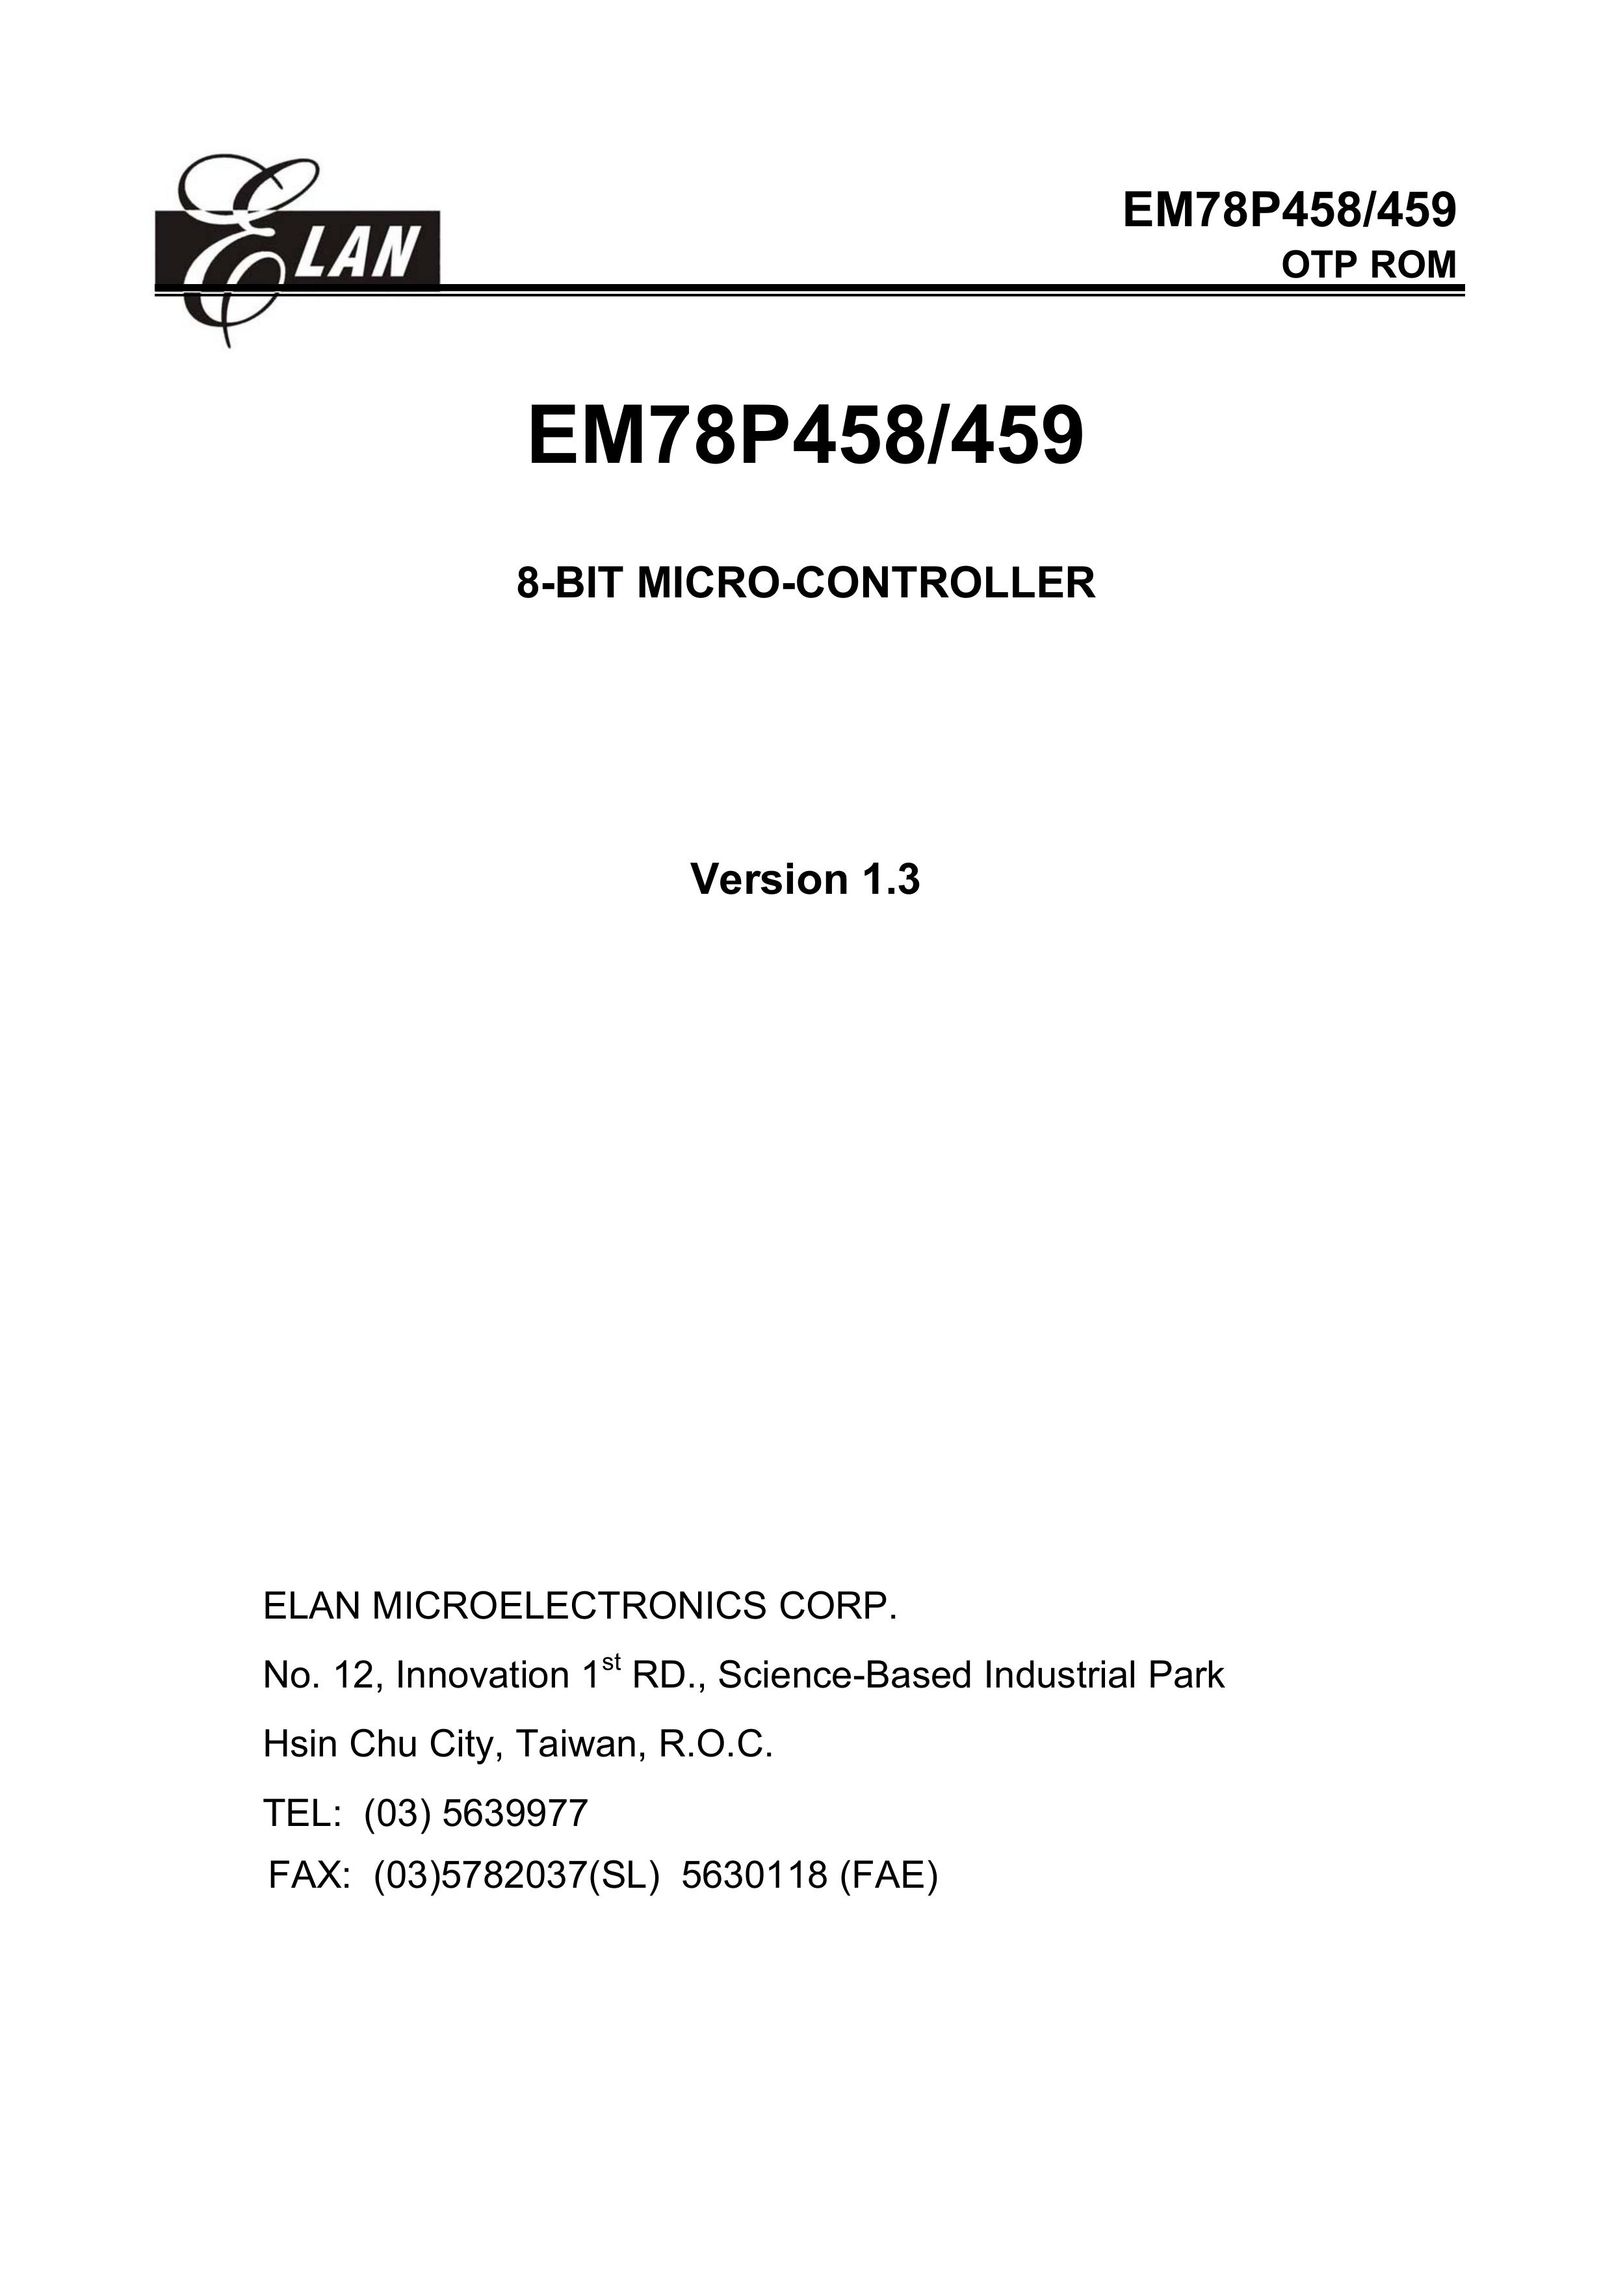 ELAN Home Systems EM78P458 Network Card User Manual